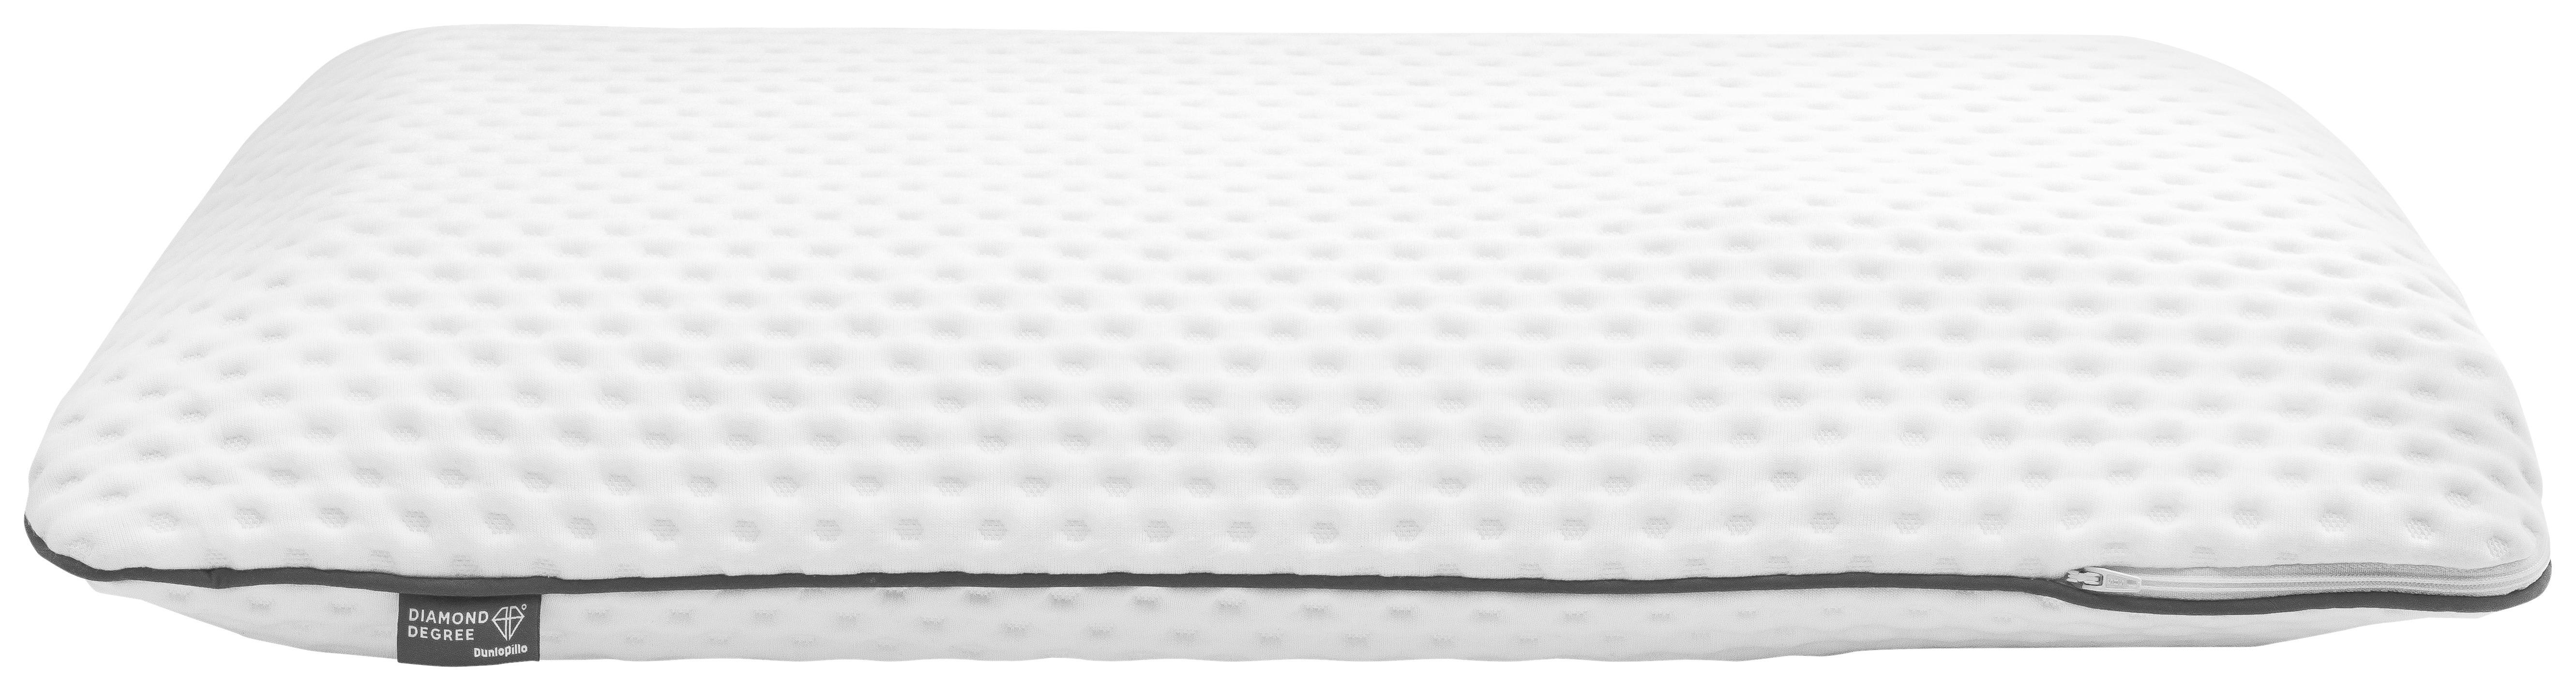 NACKENKISSEN   60/40 cm       - Weiß, Basics, Textil (60/40cm) - Dunlopillo